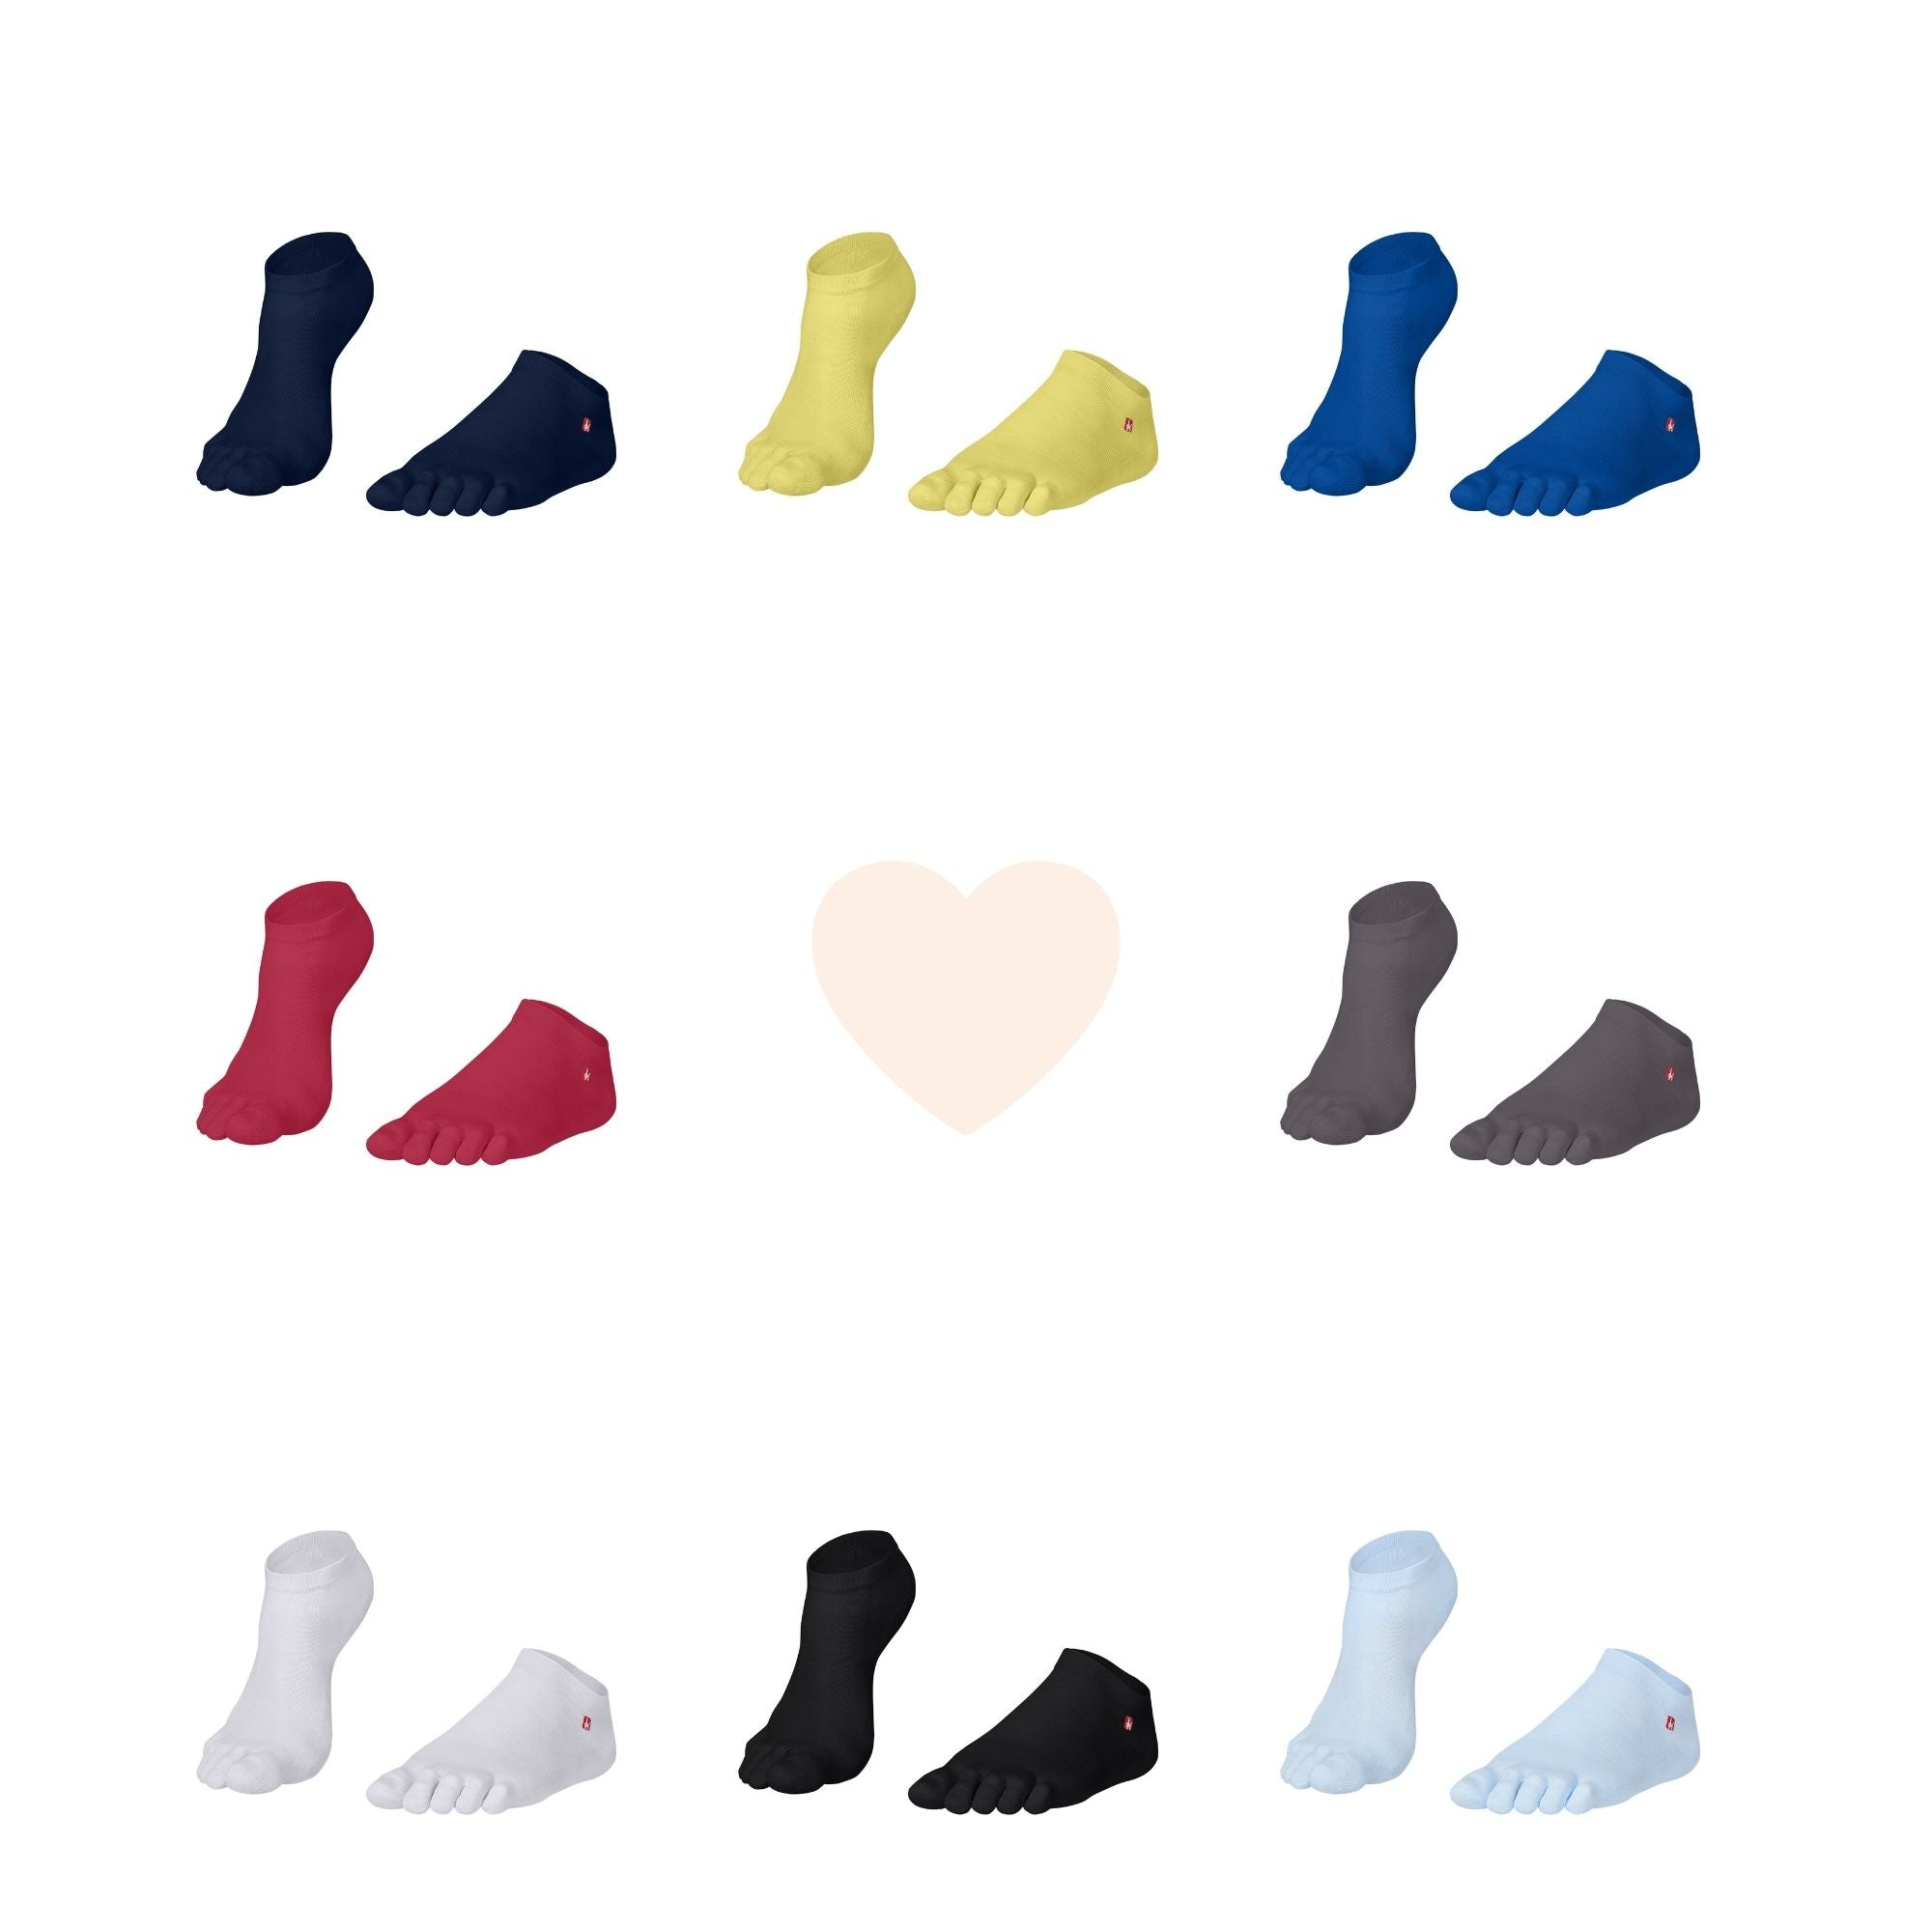 Toe socks Coolmax Sneaker from Knitido Track & Trail ultralite fresh in many colors